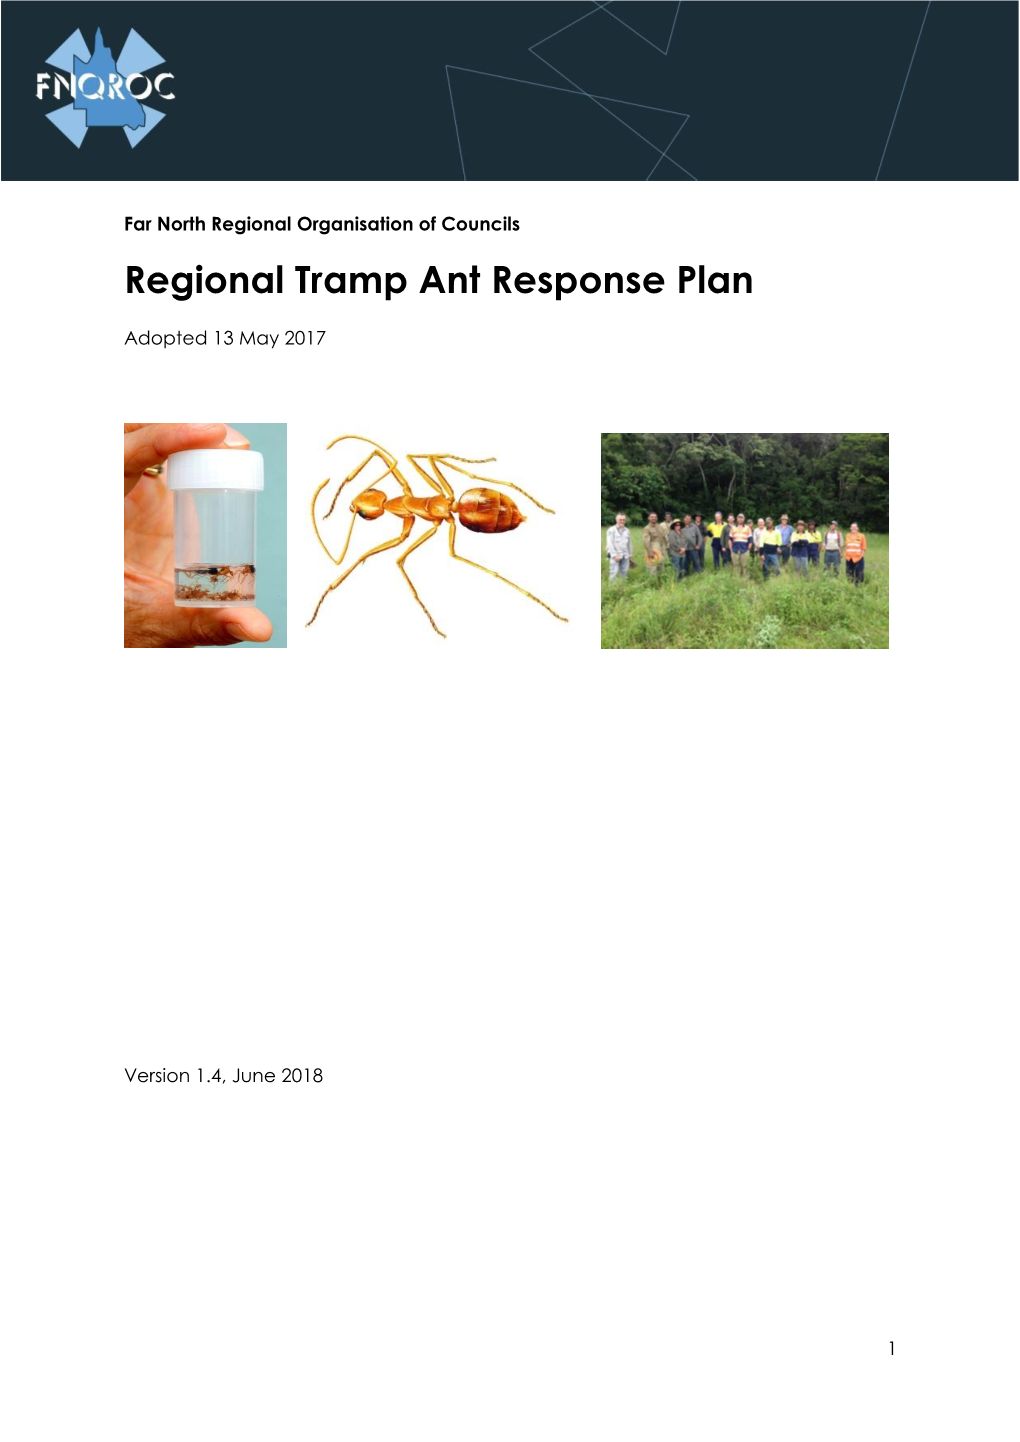 FNQROC Regional Tramp Ant Response Plan